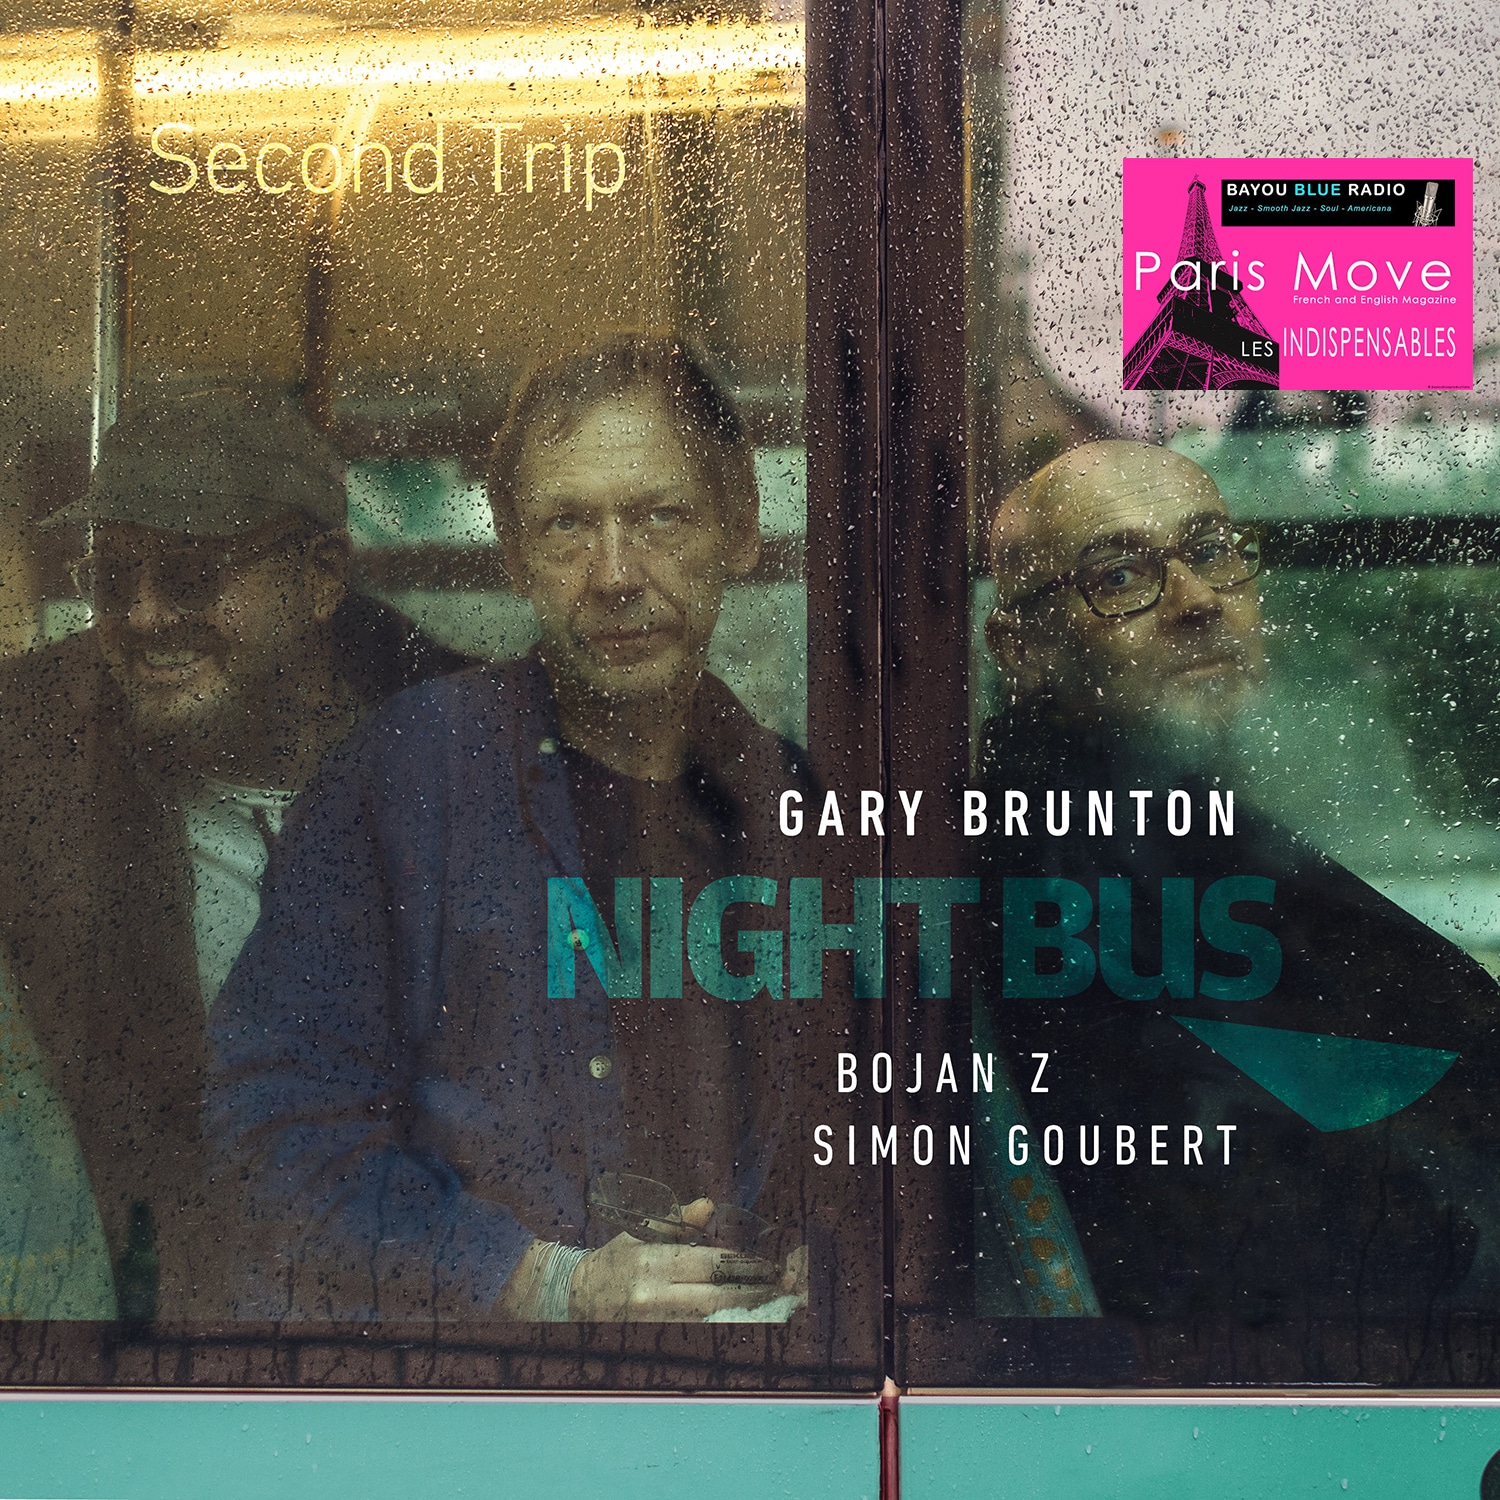 Gary Brunton, Boyan Z, Simon Goubert – Night Bus Second Trip